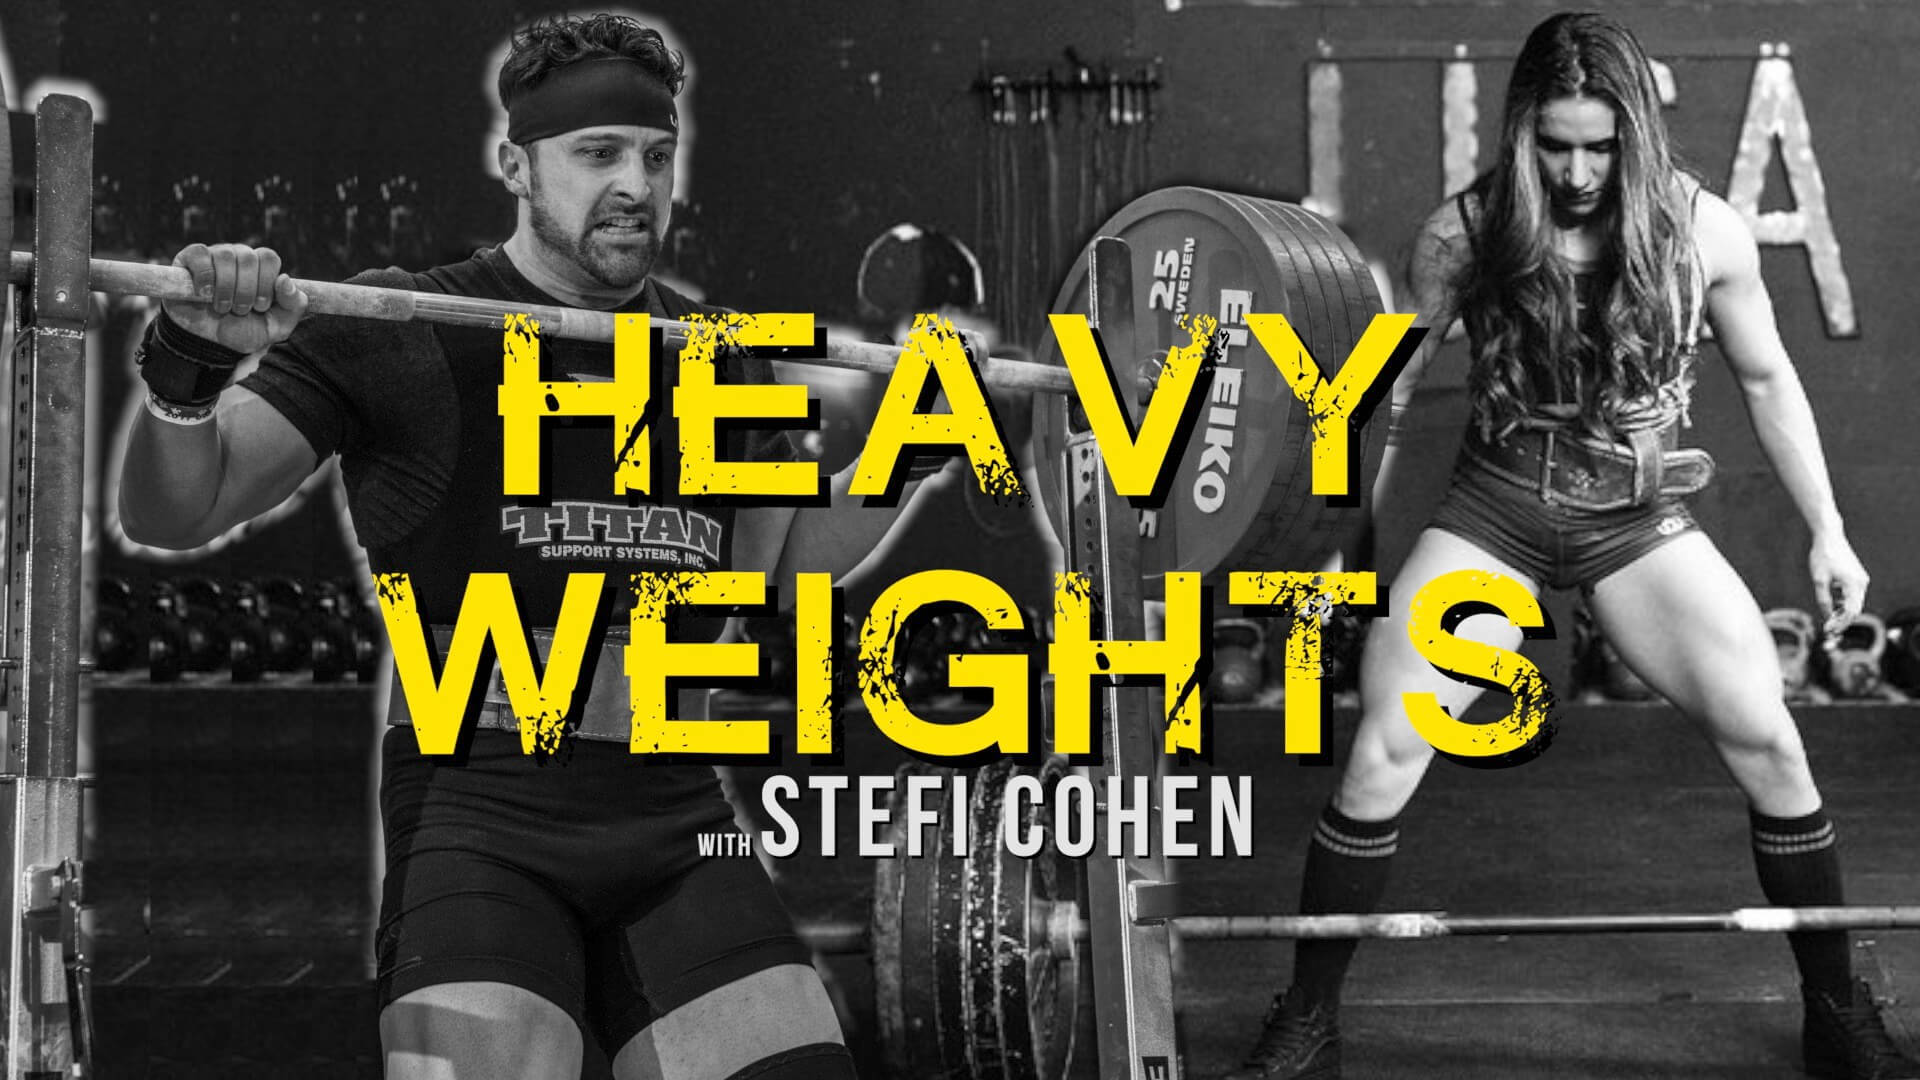 Watch Stefi Cohen's New World Record 518lb Deadlift at 119lb Bodyweight